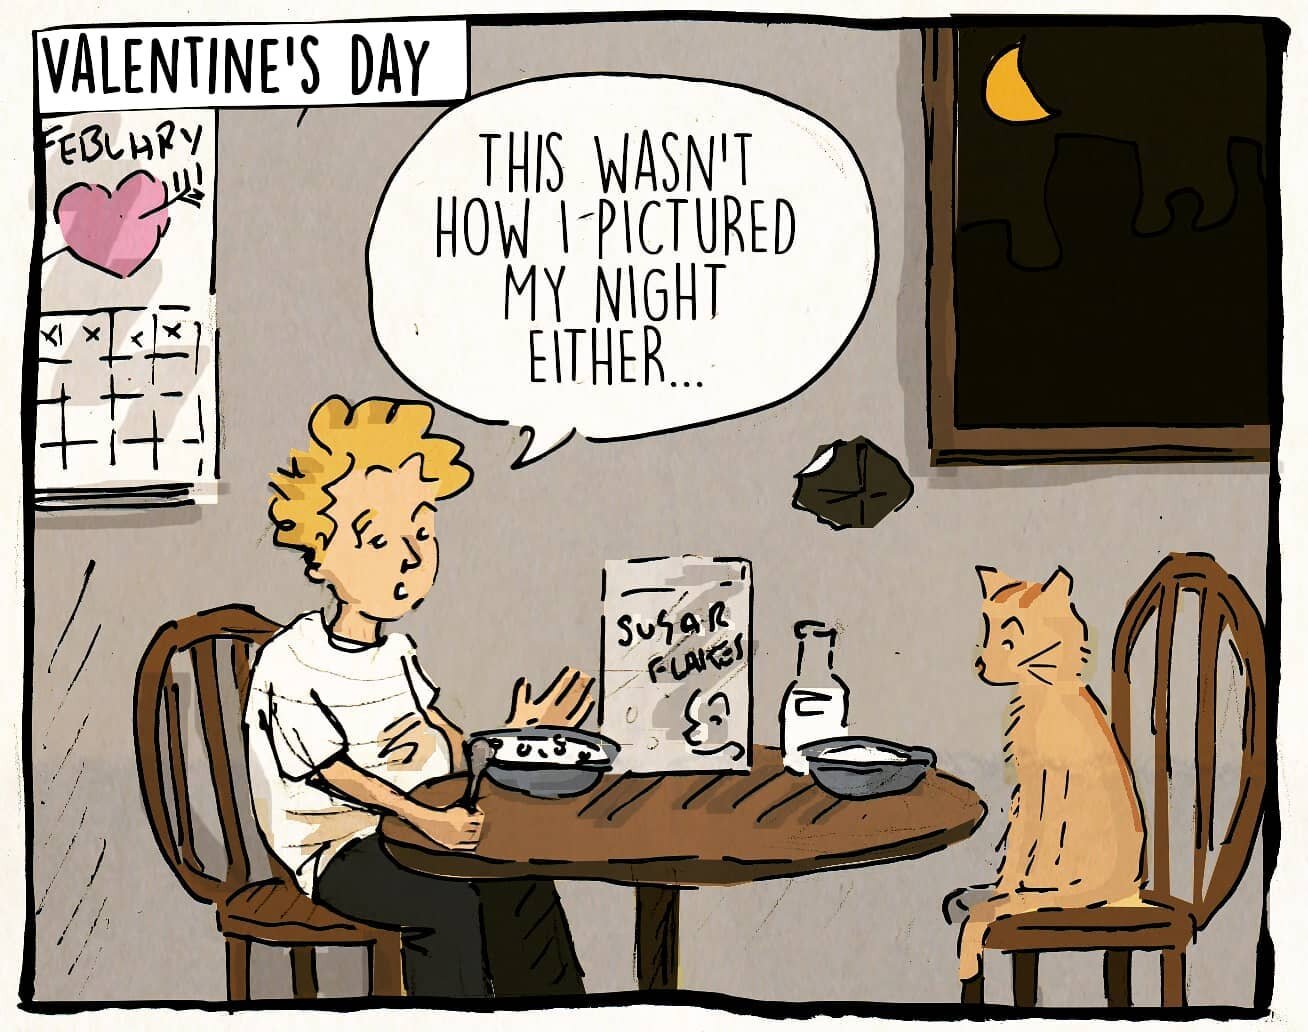 Valentine's Day #valentines #valentine #valentinesday #valentinesday2020 #comics #comicstrip #webcomic #webcomics #cat #catsofinstagram #catmemes #catvalentine #art #comicart